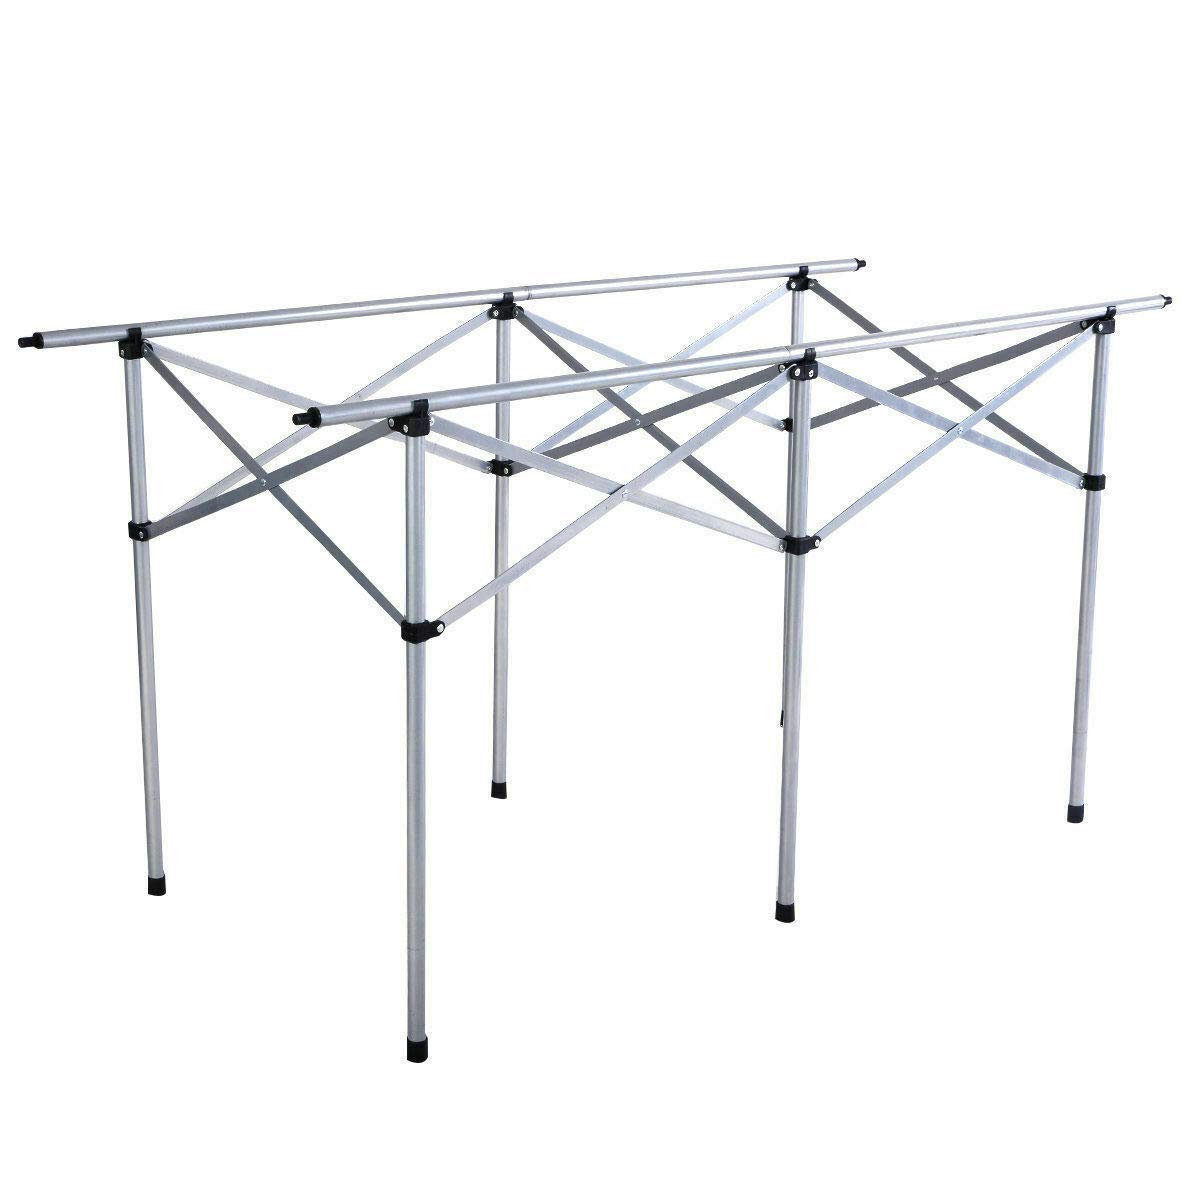 Giantex Folding Camping Table, Portable Picnic Table, Aluminium Patio Table